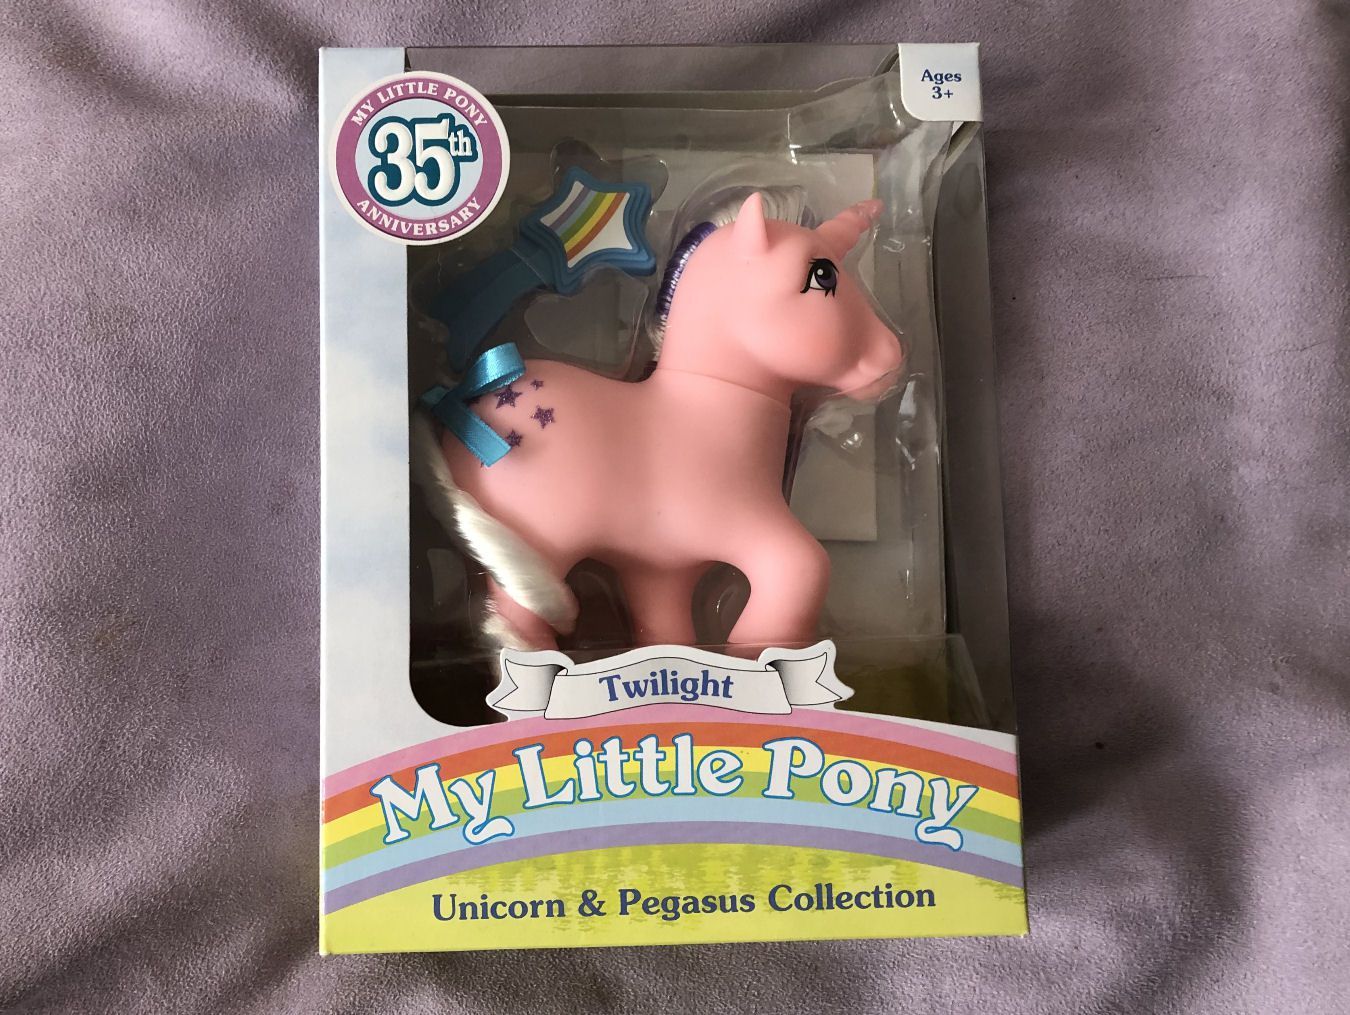 My Little Pony Gen 1 - Twilight  (Repro)  (1)